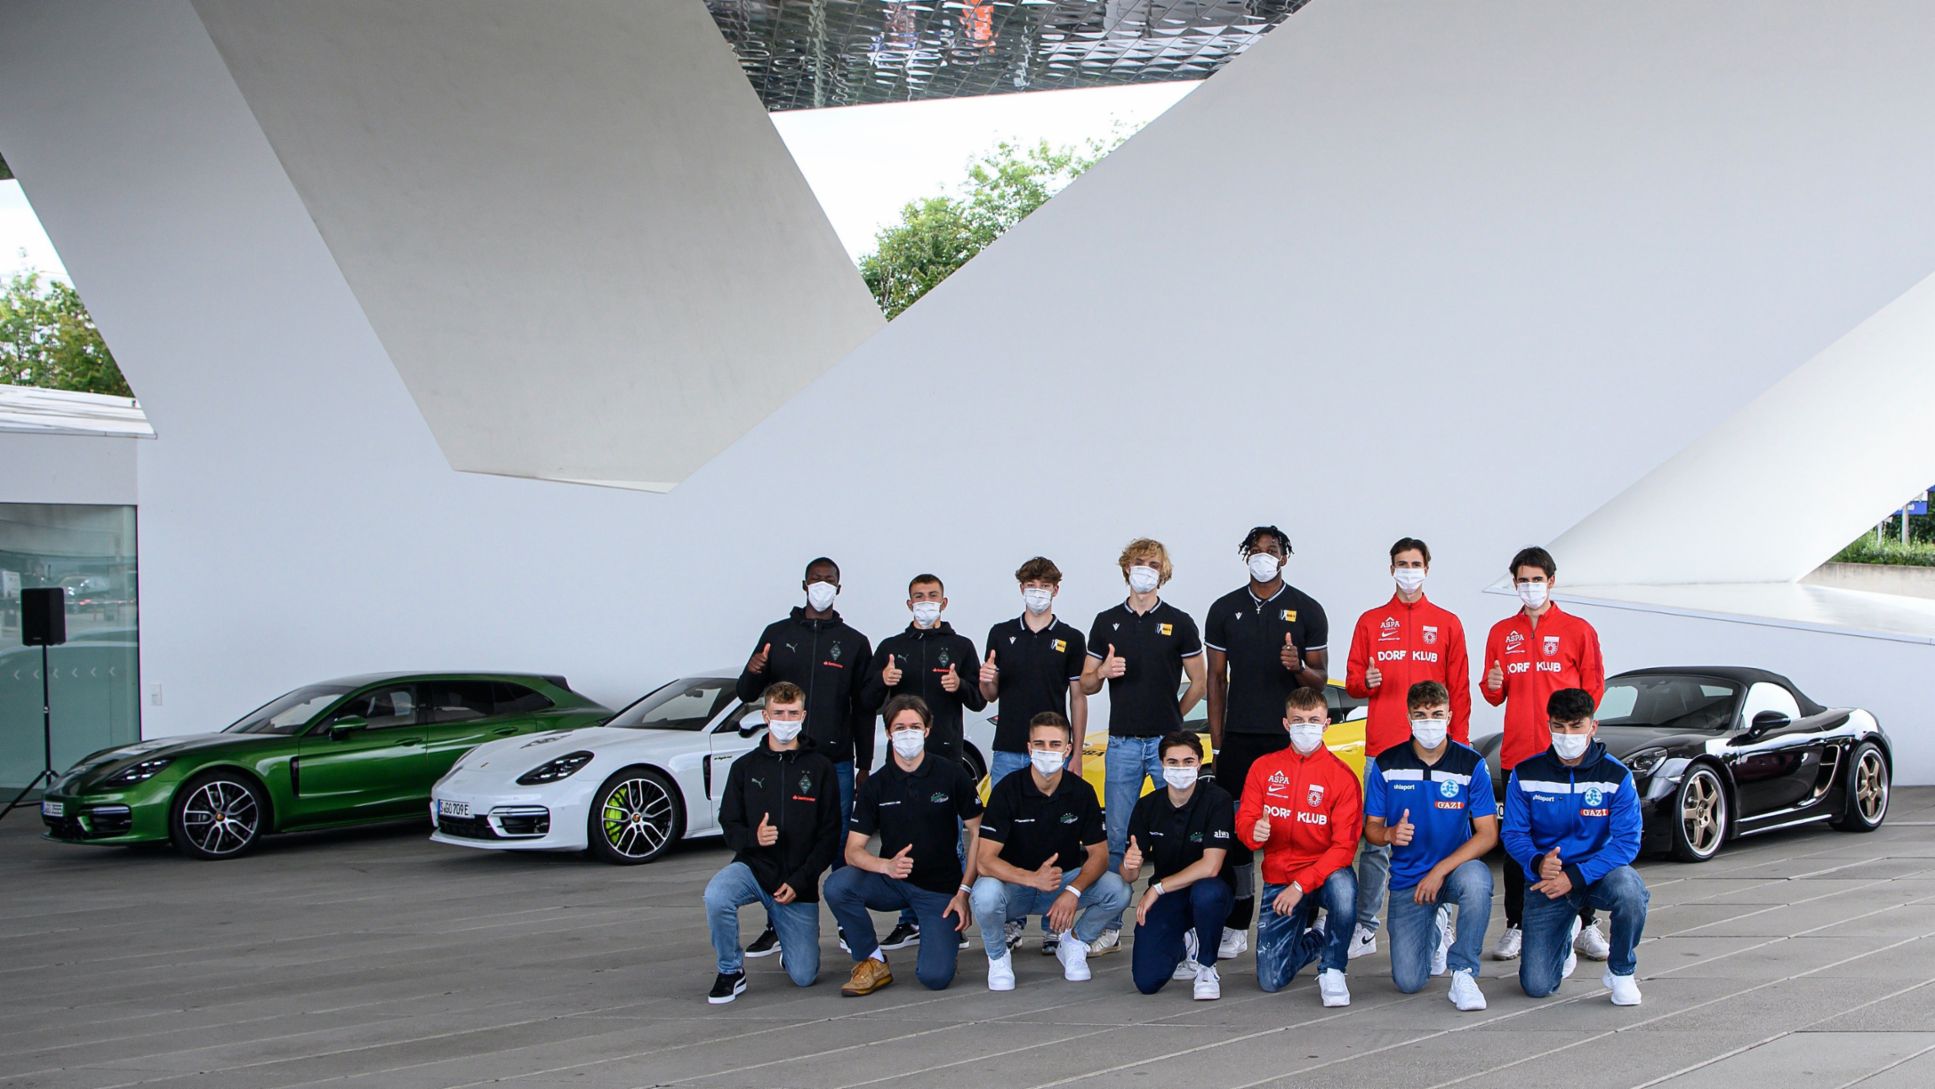 Gruppenbild der Sieger des Porsche Turbo Award 2021, Porsche AG